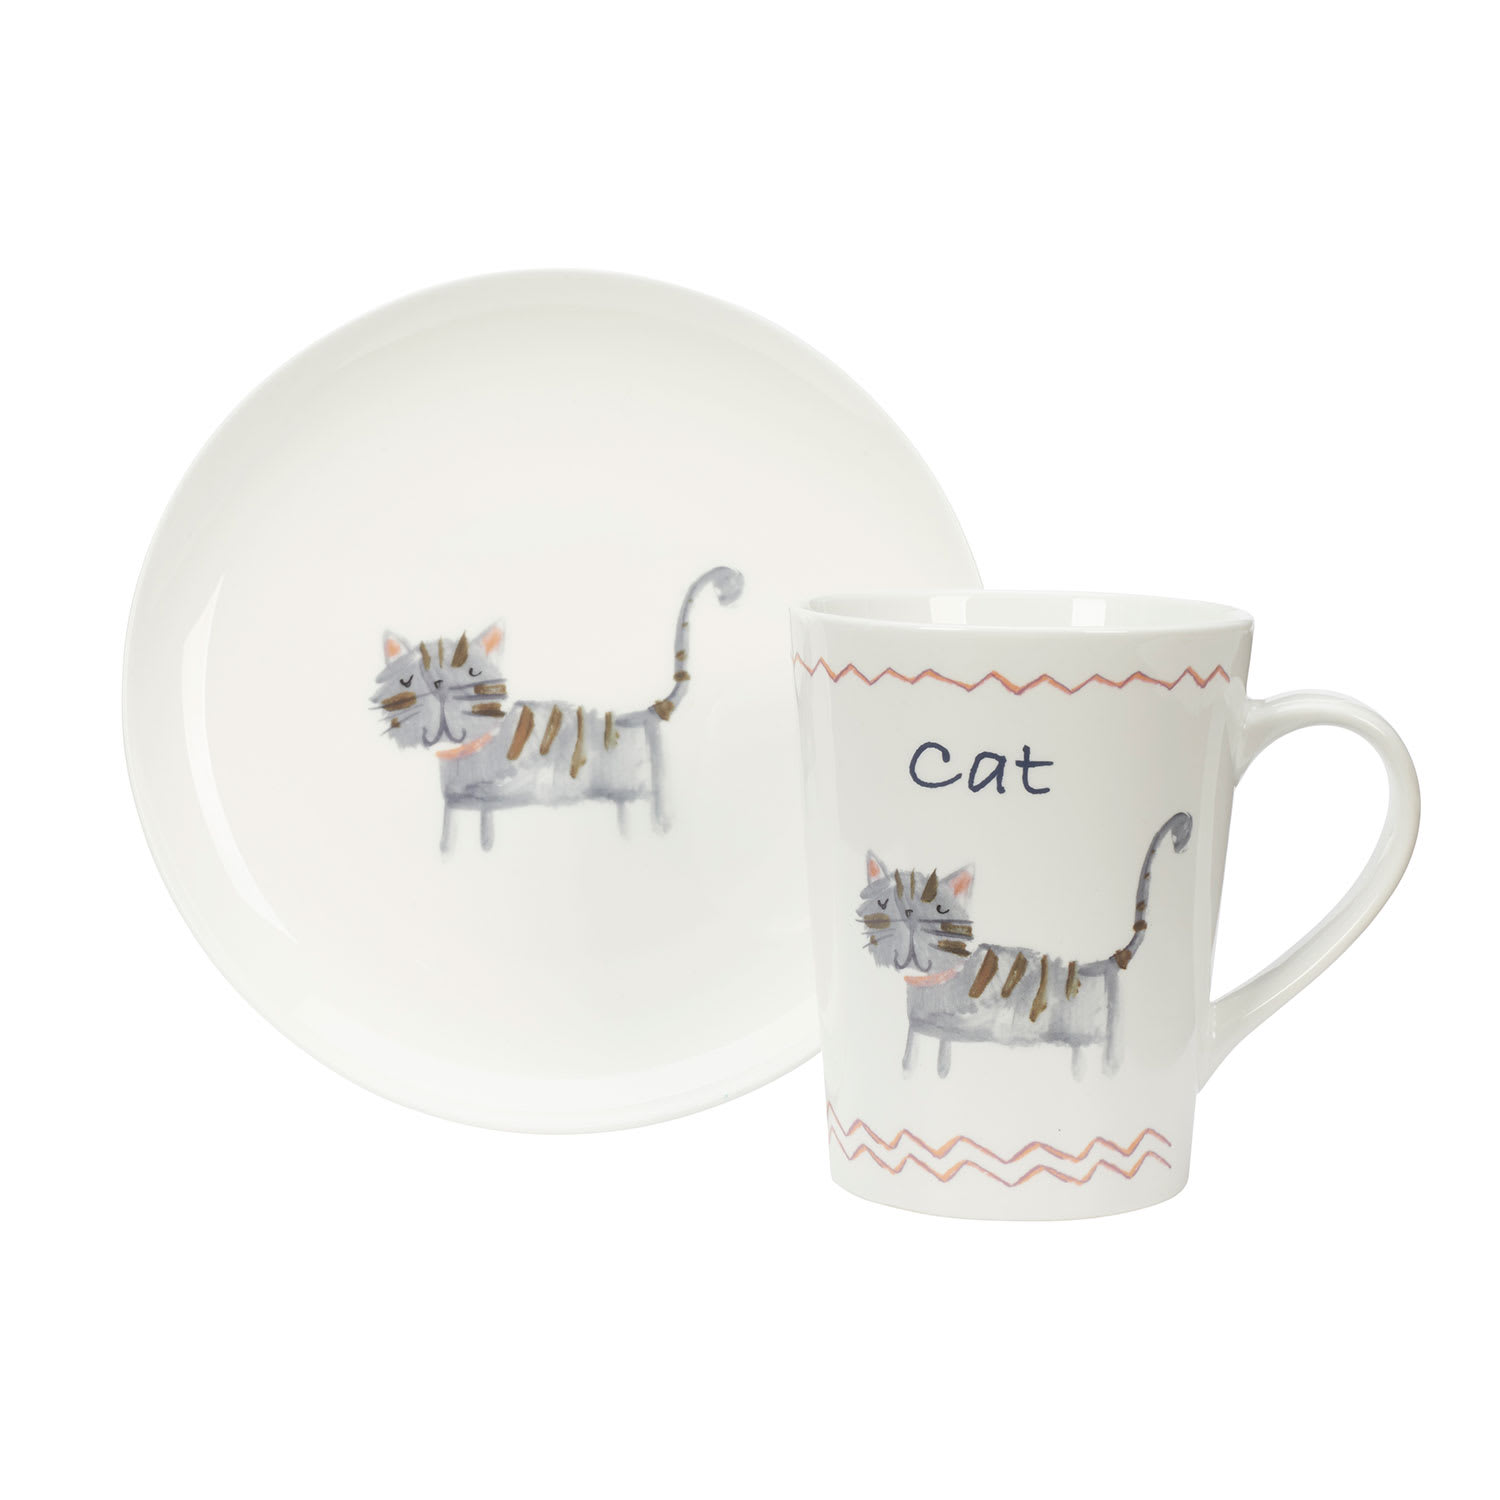 Cat Mug & Salad Plate Set - Cat